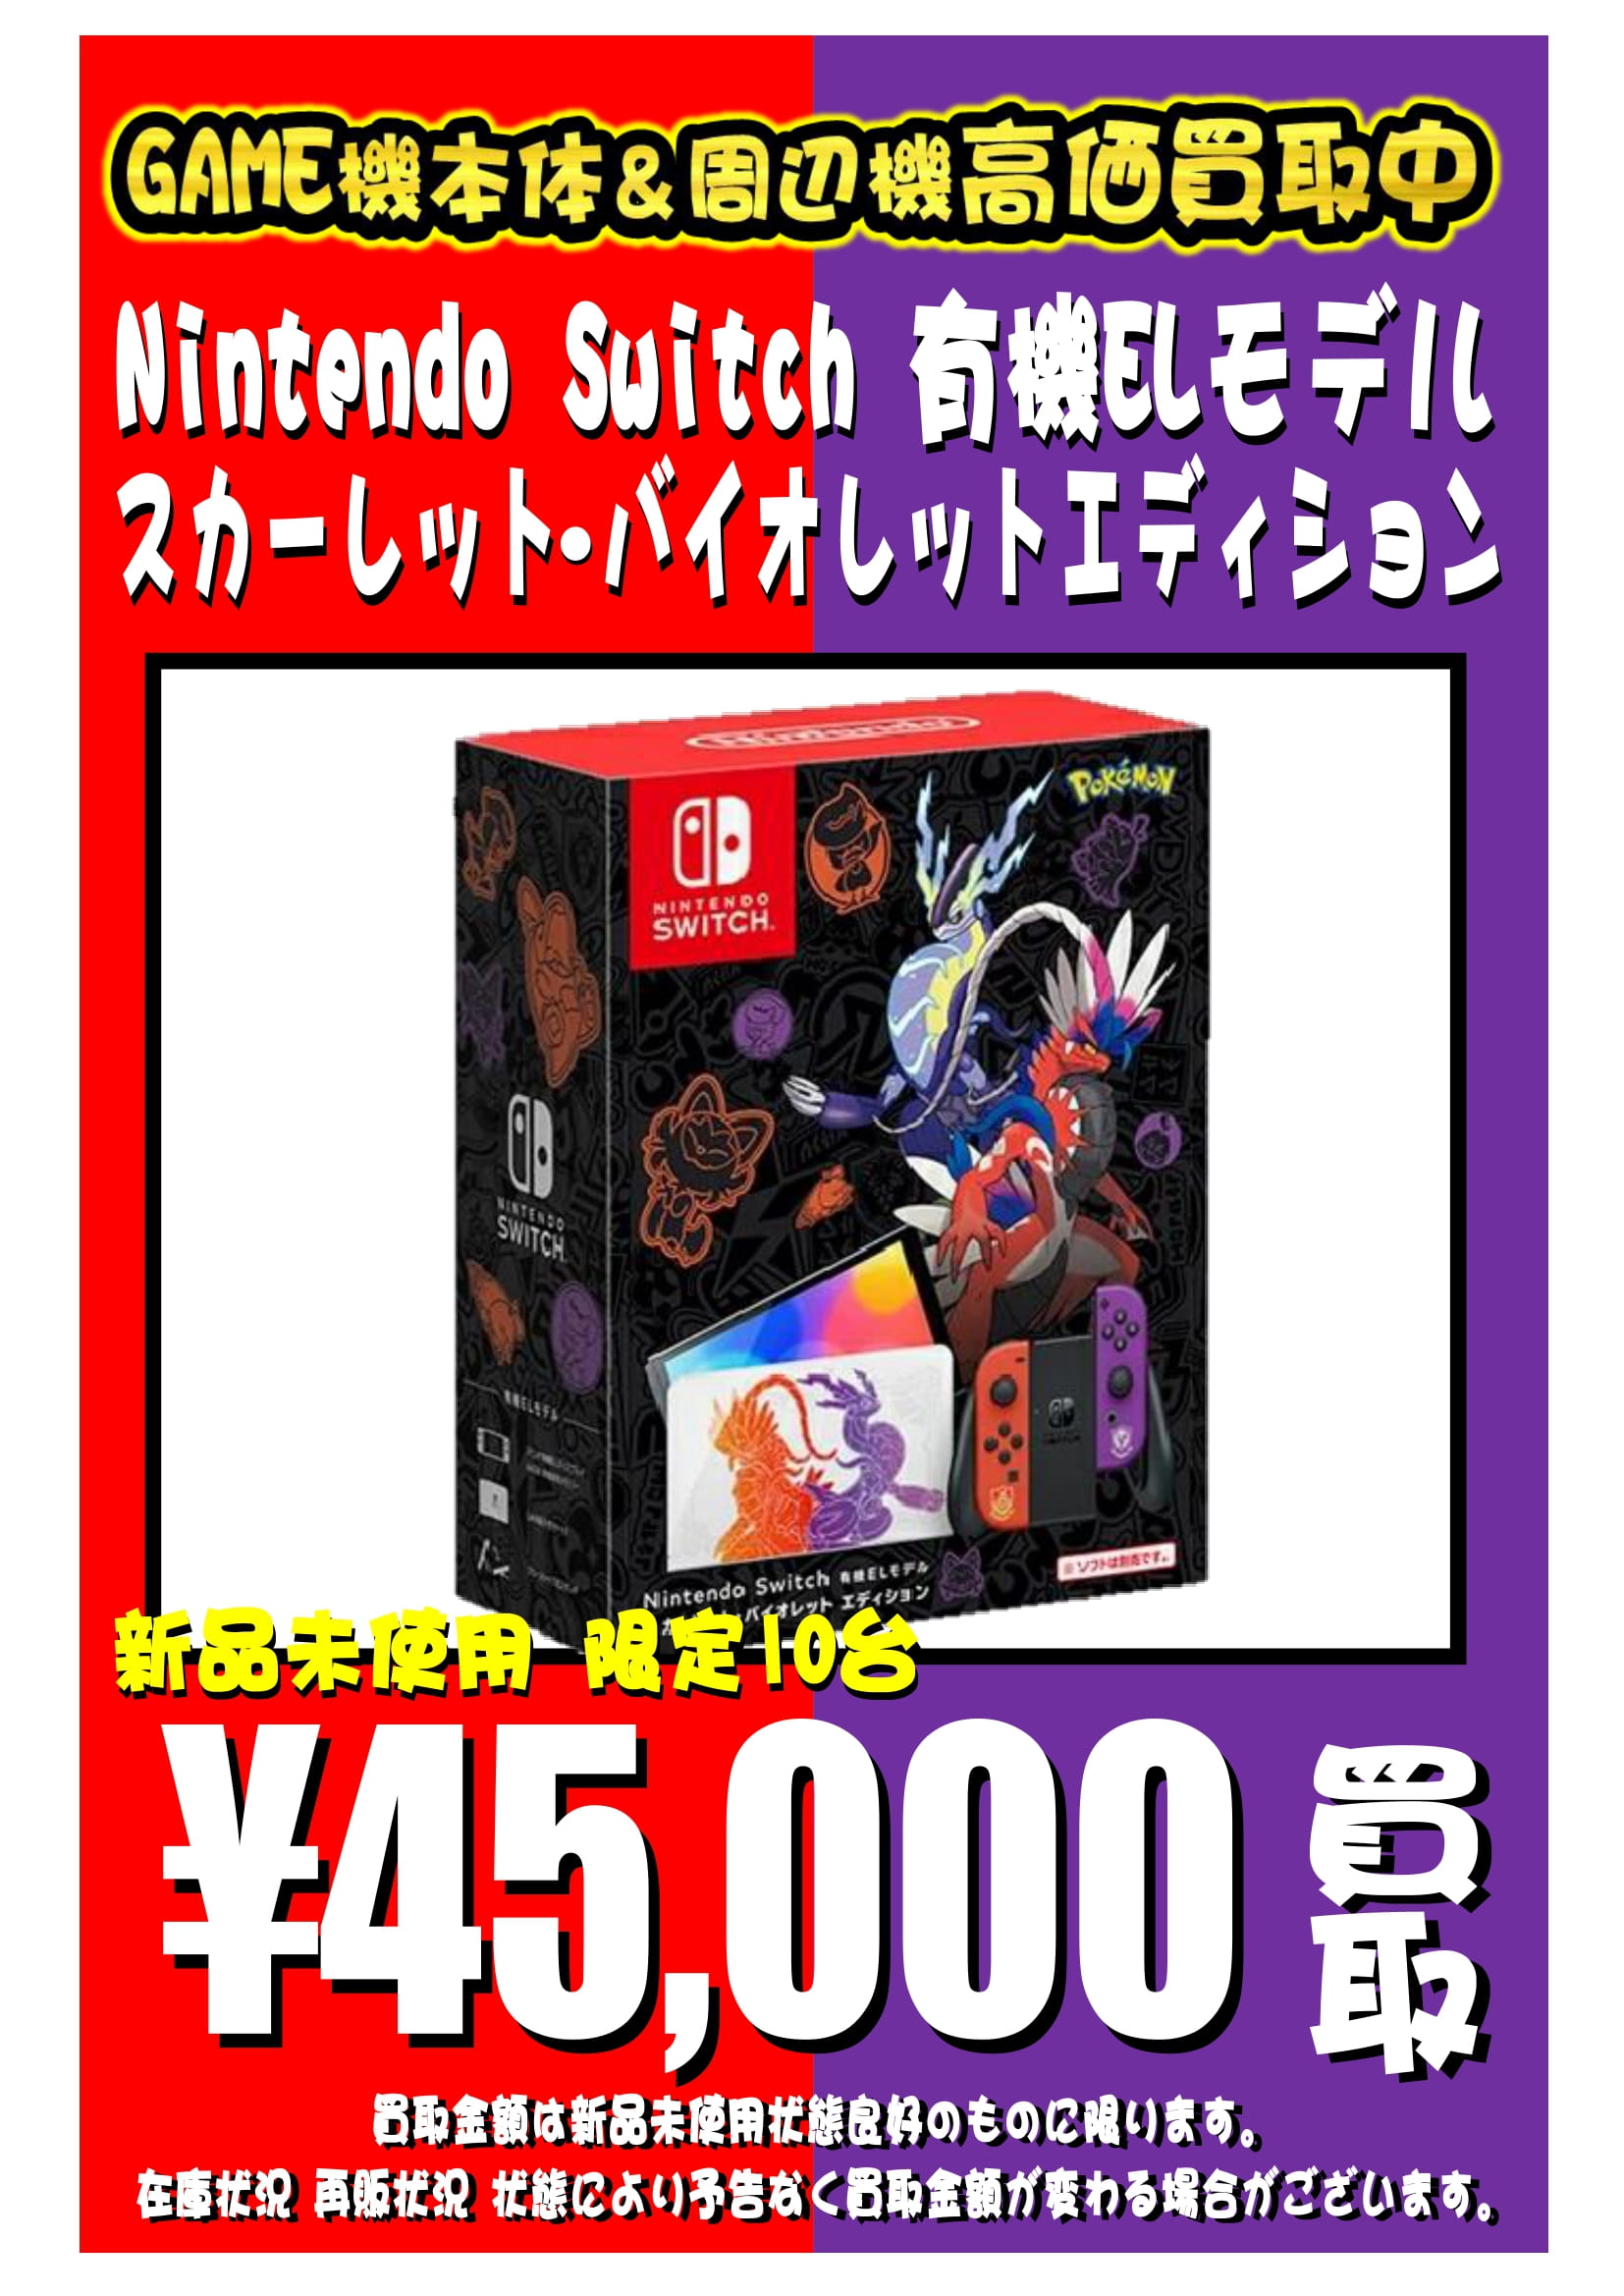 Nintendo Switch スカーレット・バイオレットエディション www